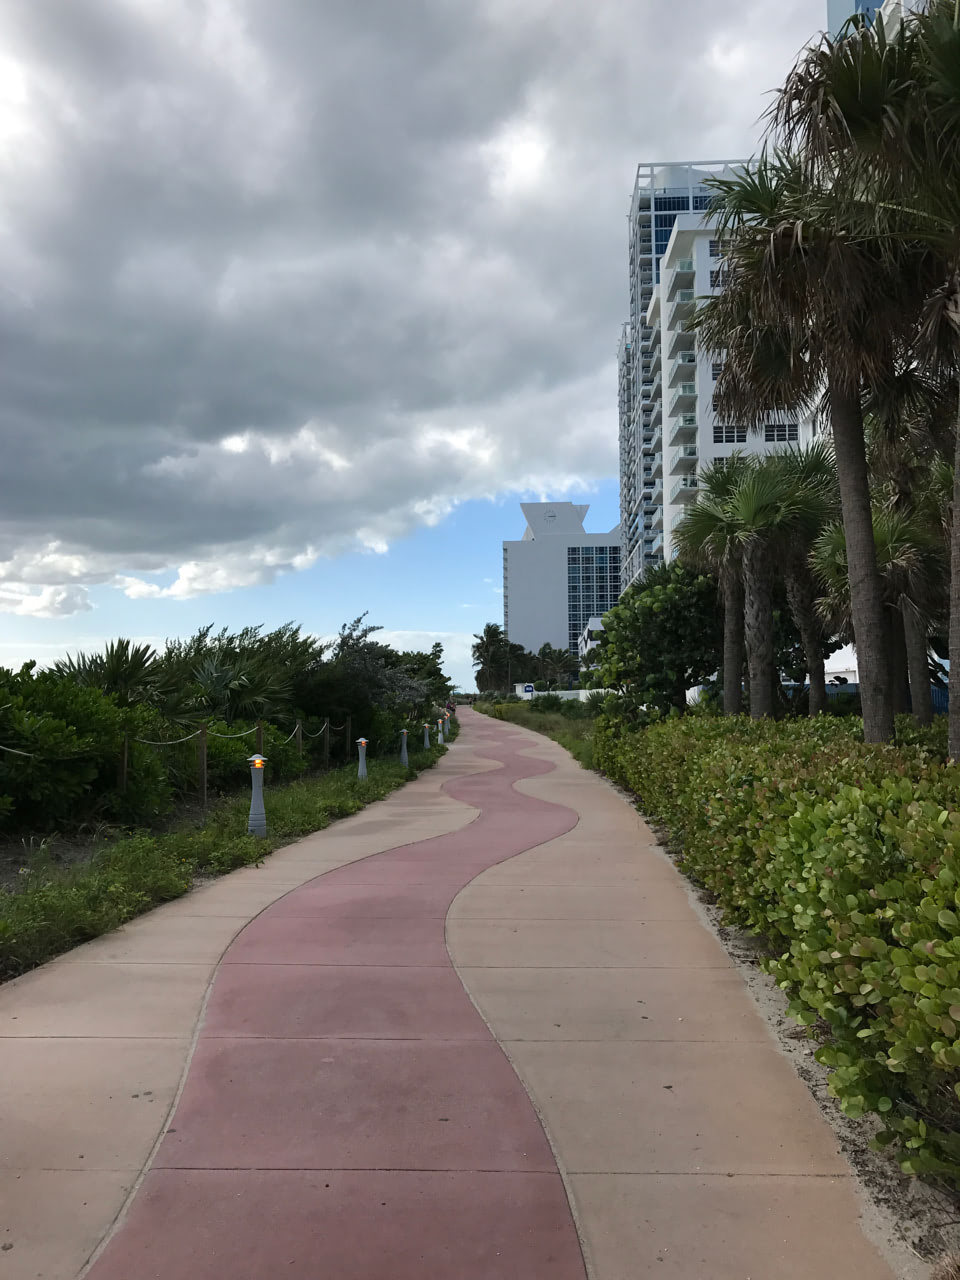 Miami Beach boardwalk